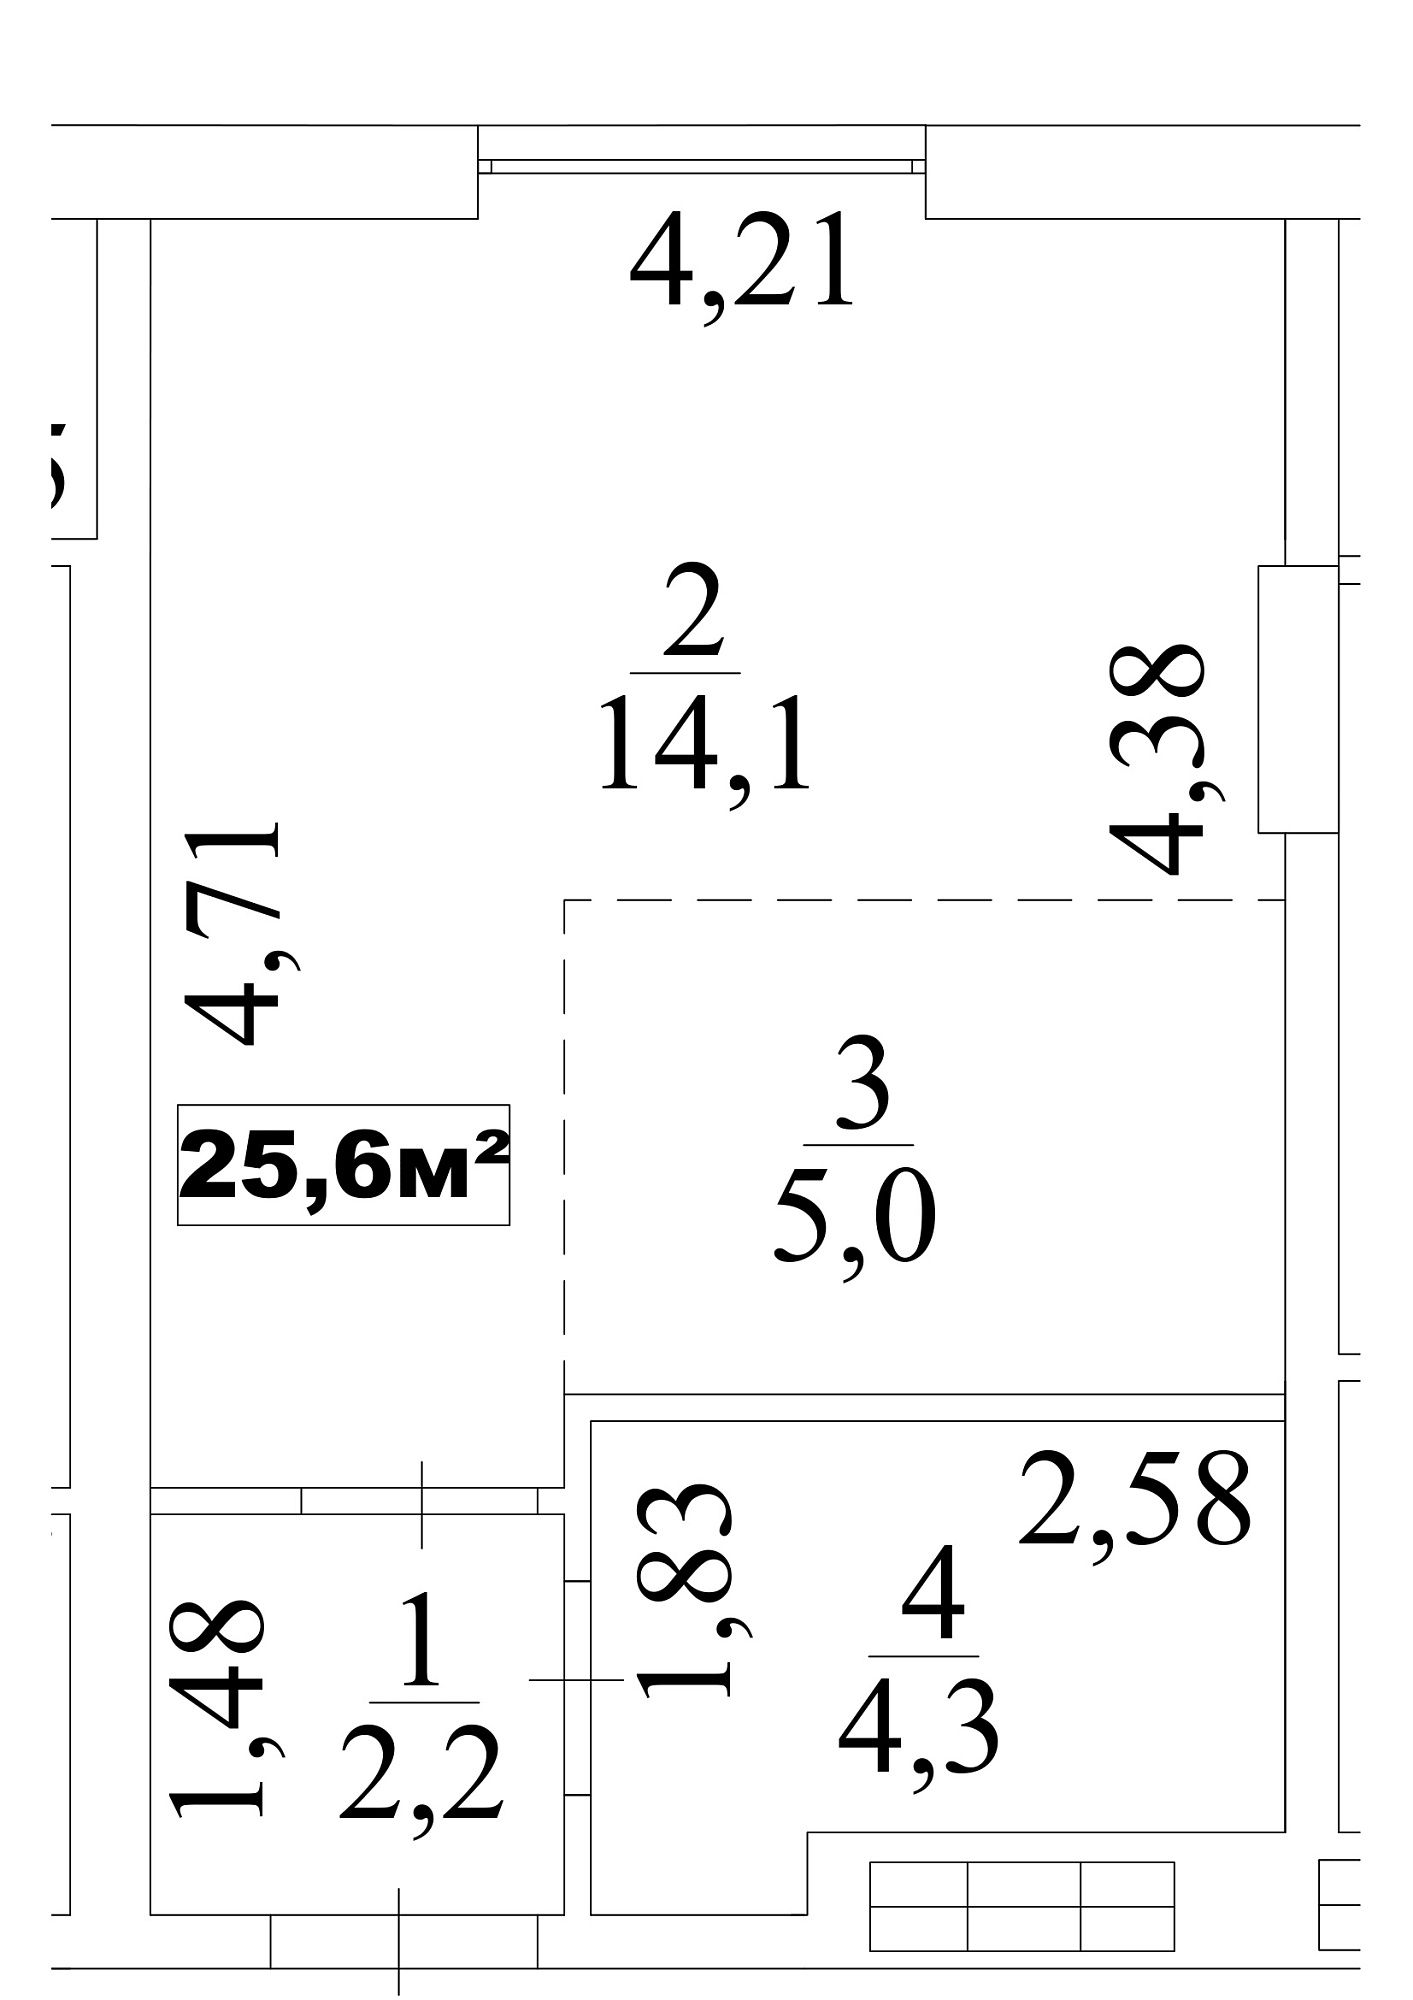 Planning Smart flats area 25.6m2, AB-10-04/0030в.